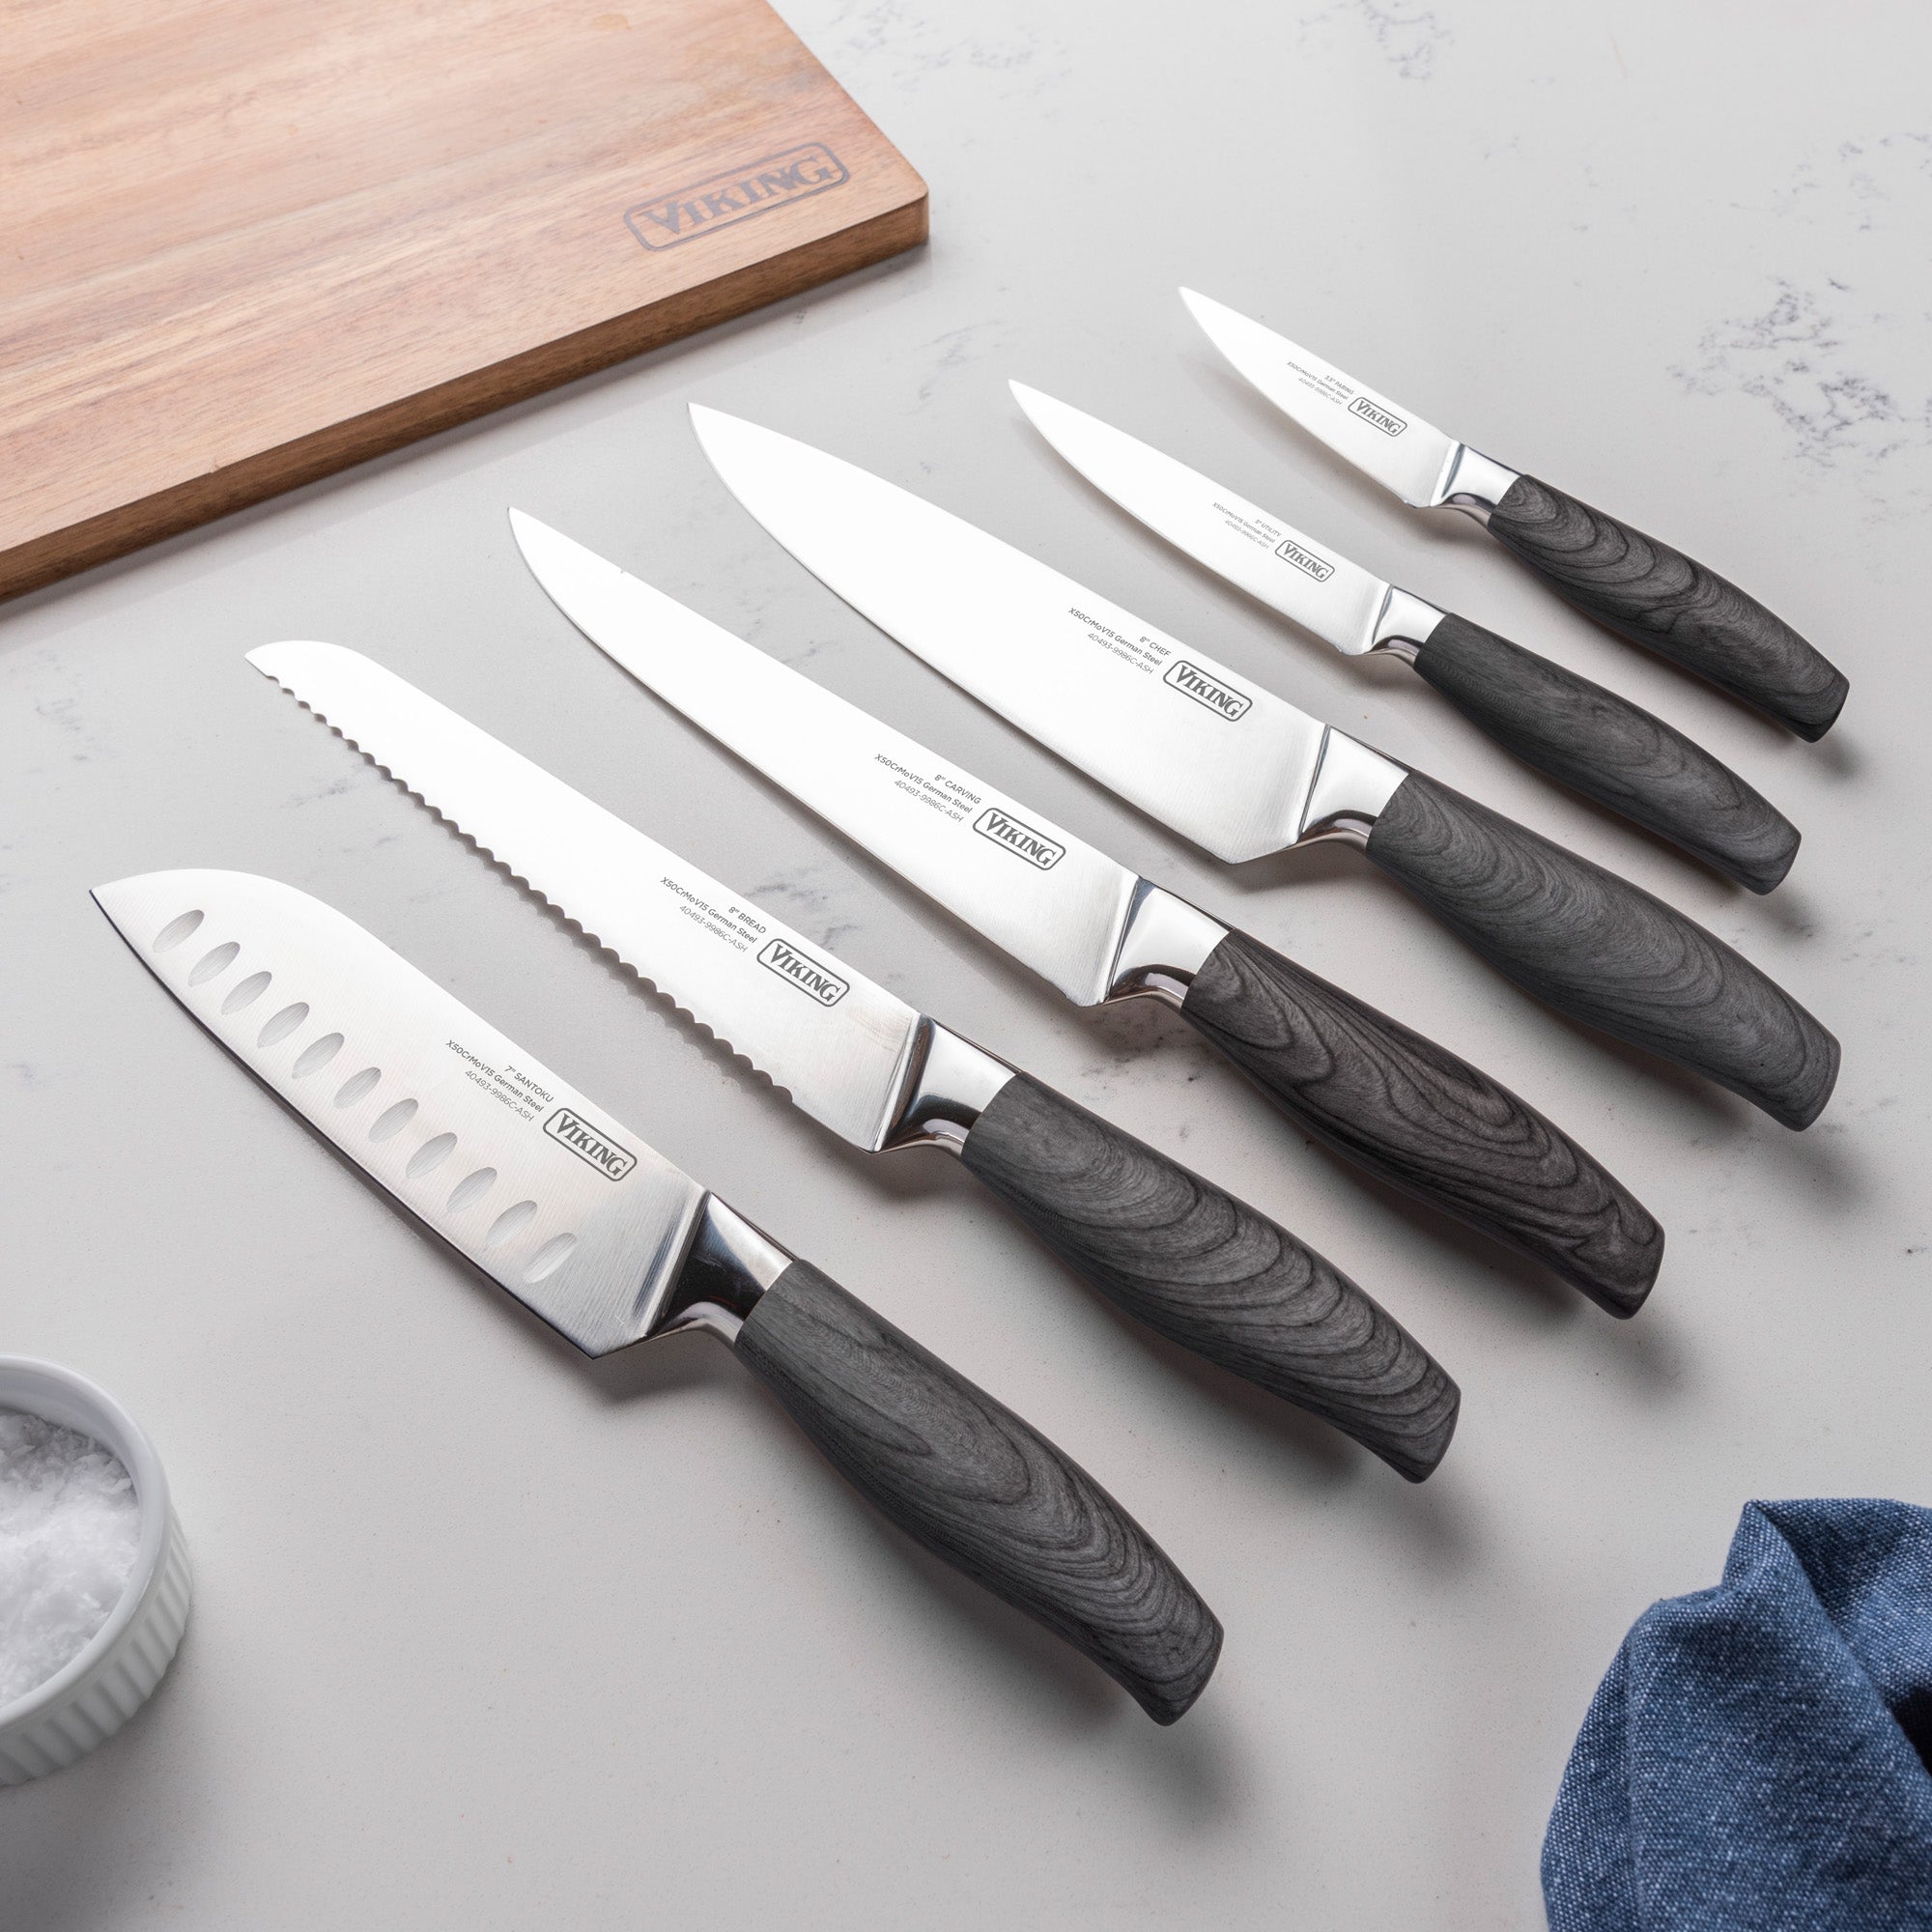 Flatware & Steak Knives, Product categories